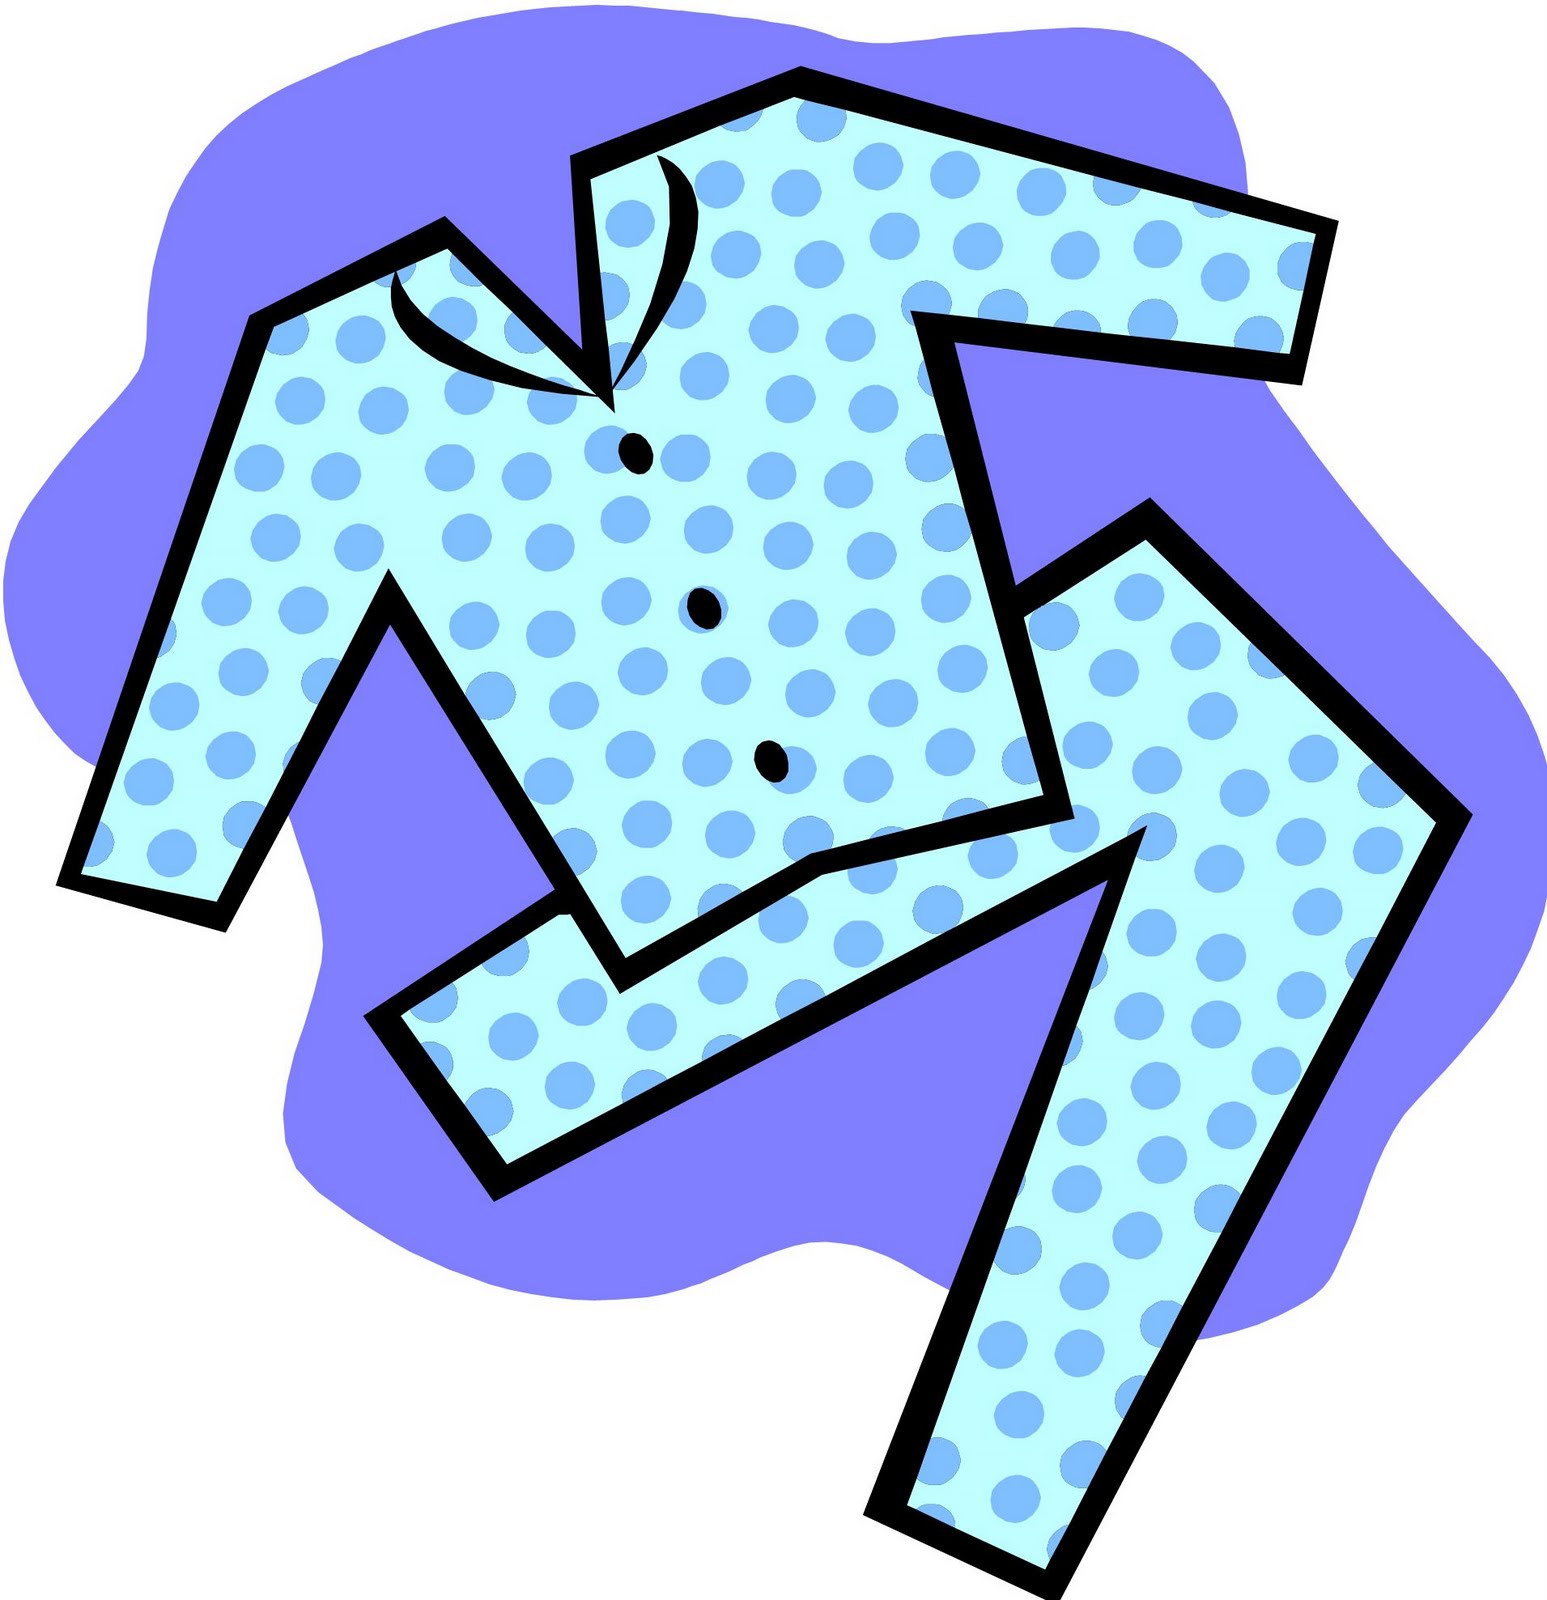 Pajama Day Clipart